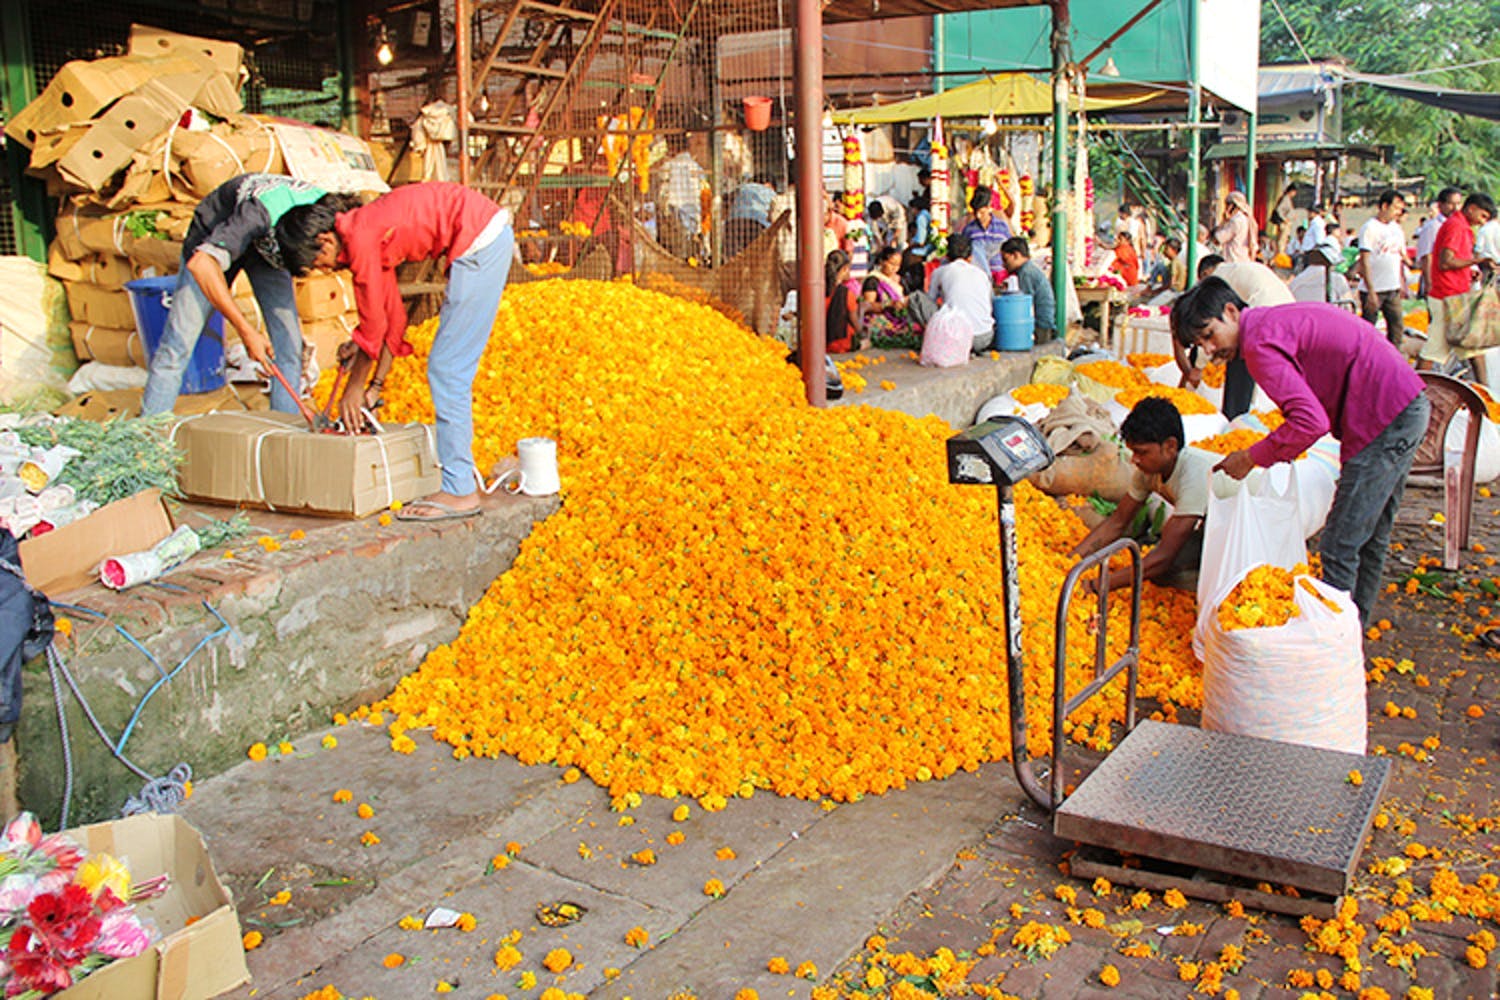 Selling,Marketplace,Public space,Yellow,Market,Bazaar,Plant,Temple,Flower